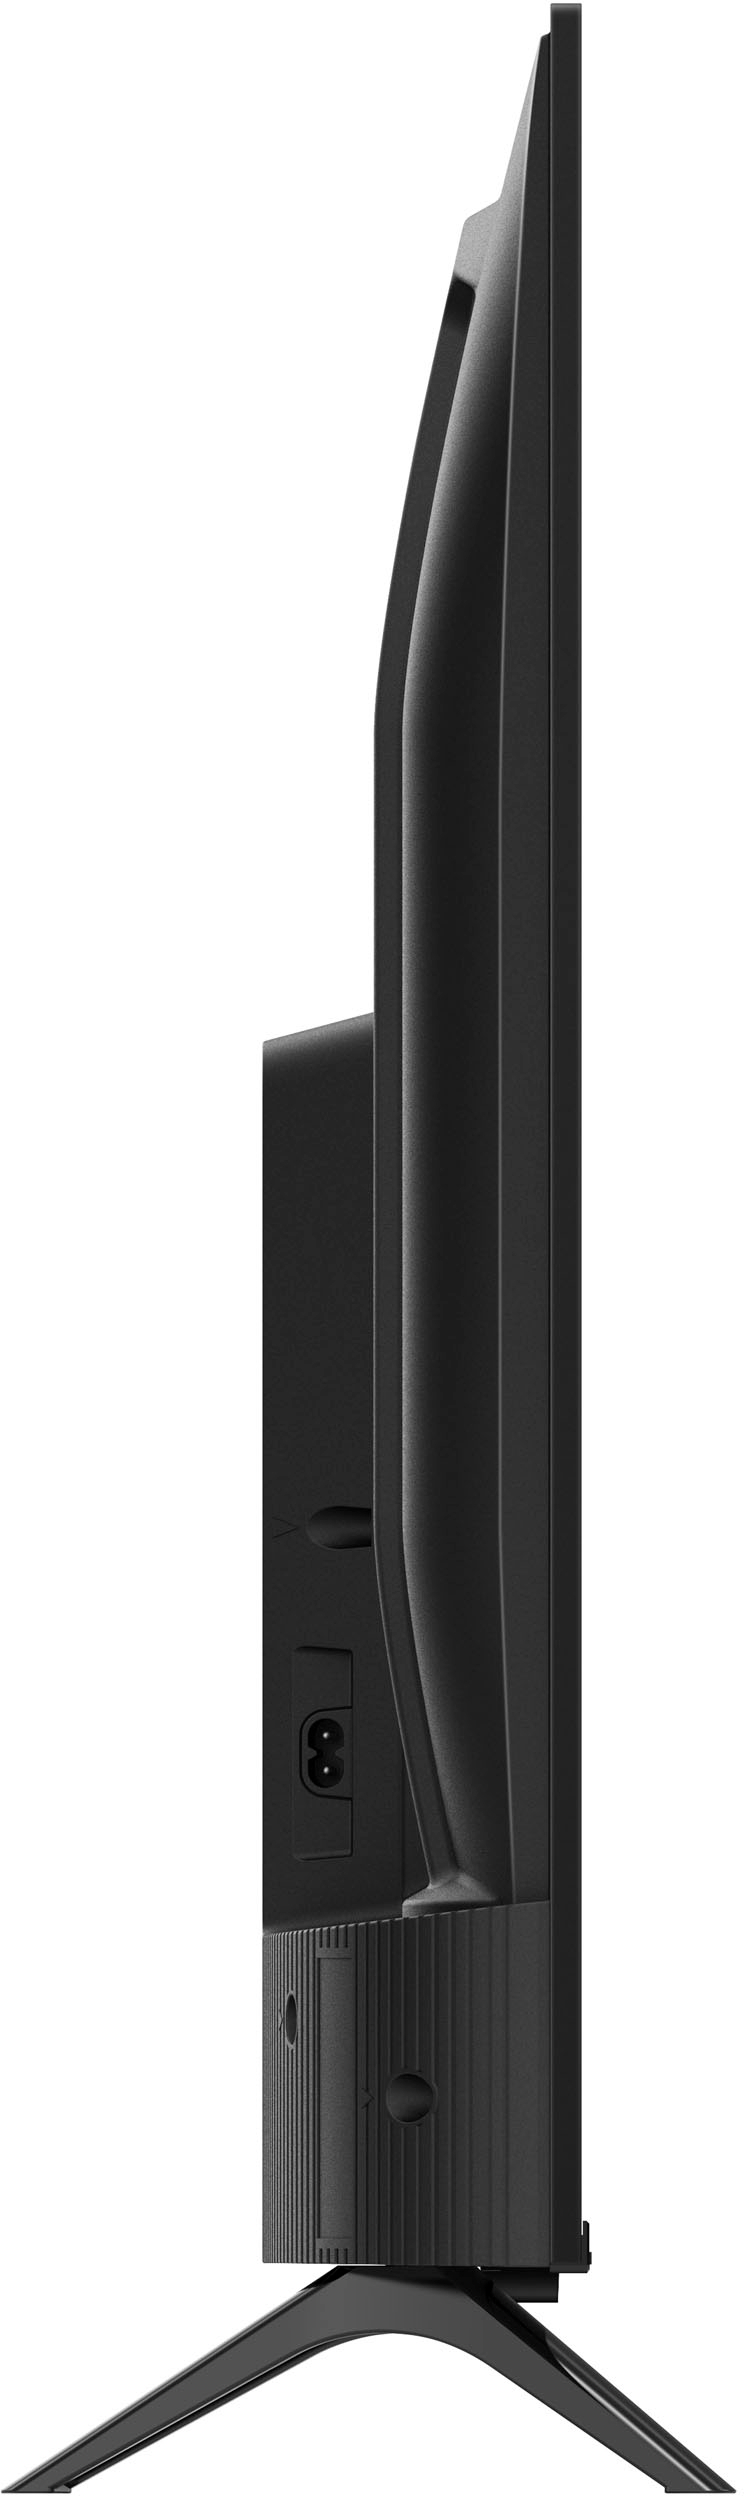 Back View: LG - UltraFine 43"4K UHD Monitor (USB) - Black